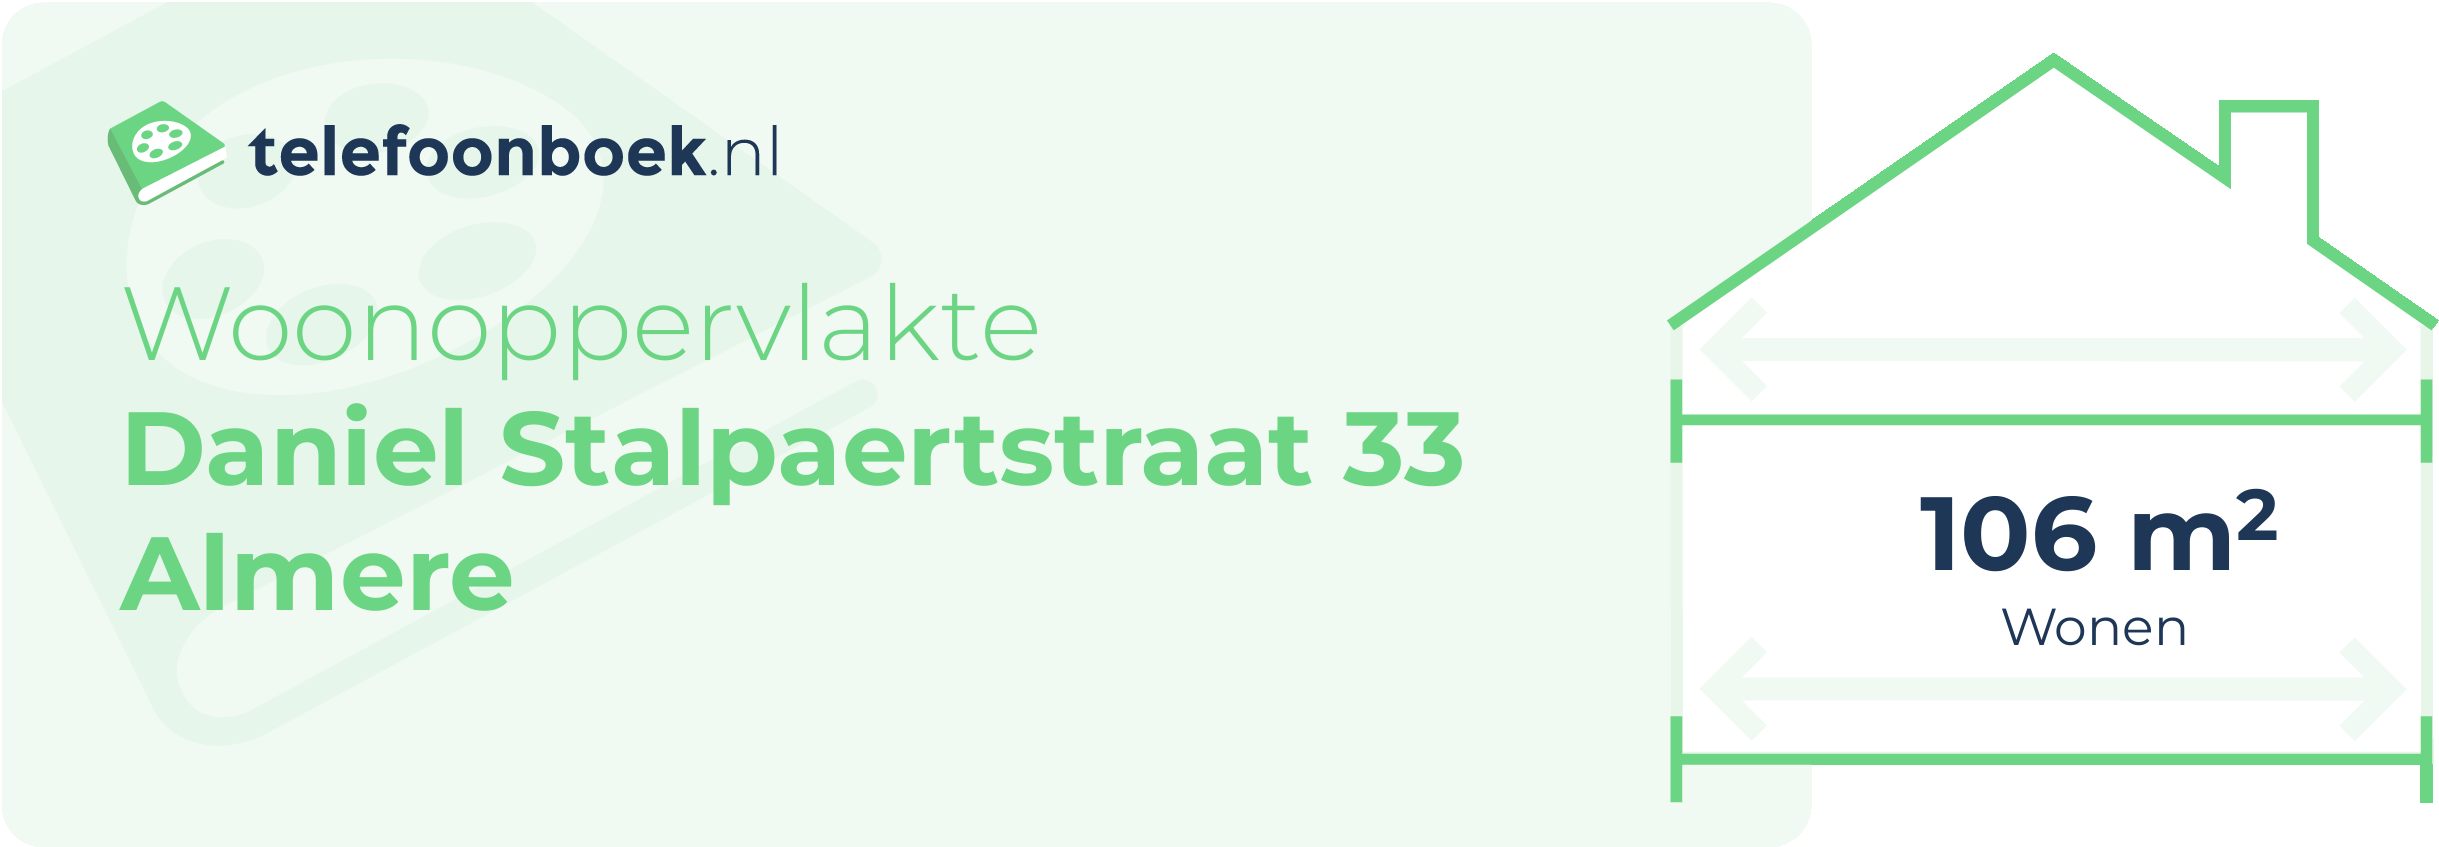 Woonoppervlakte Daniel Stalpaertstraat 33 Almere